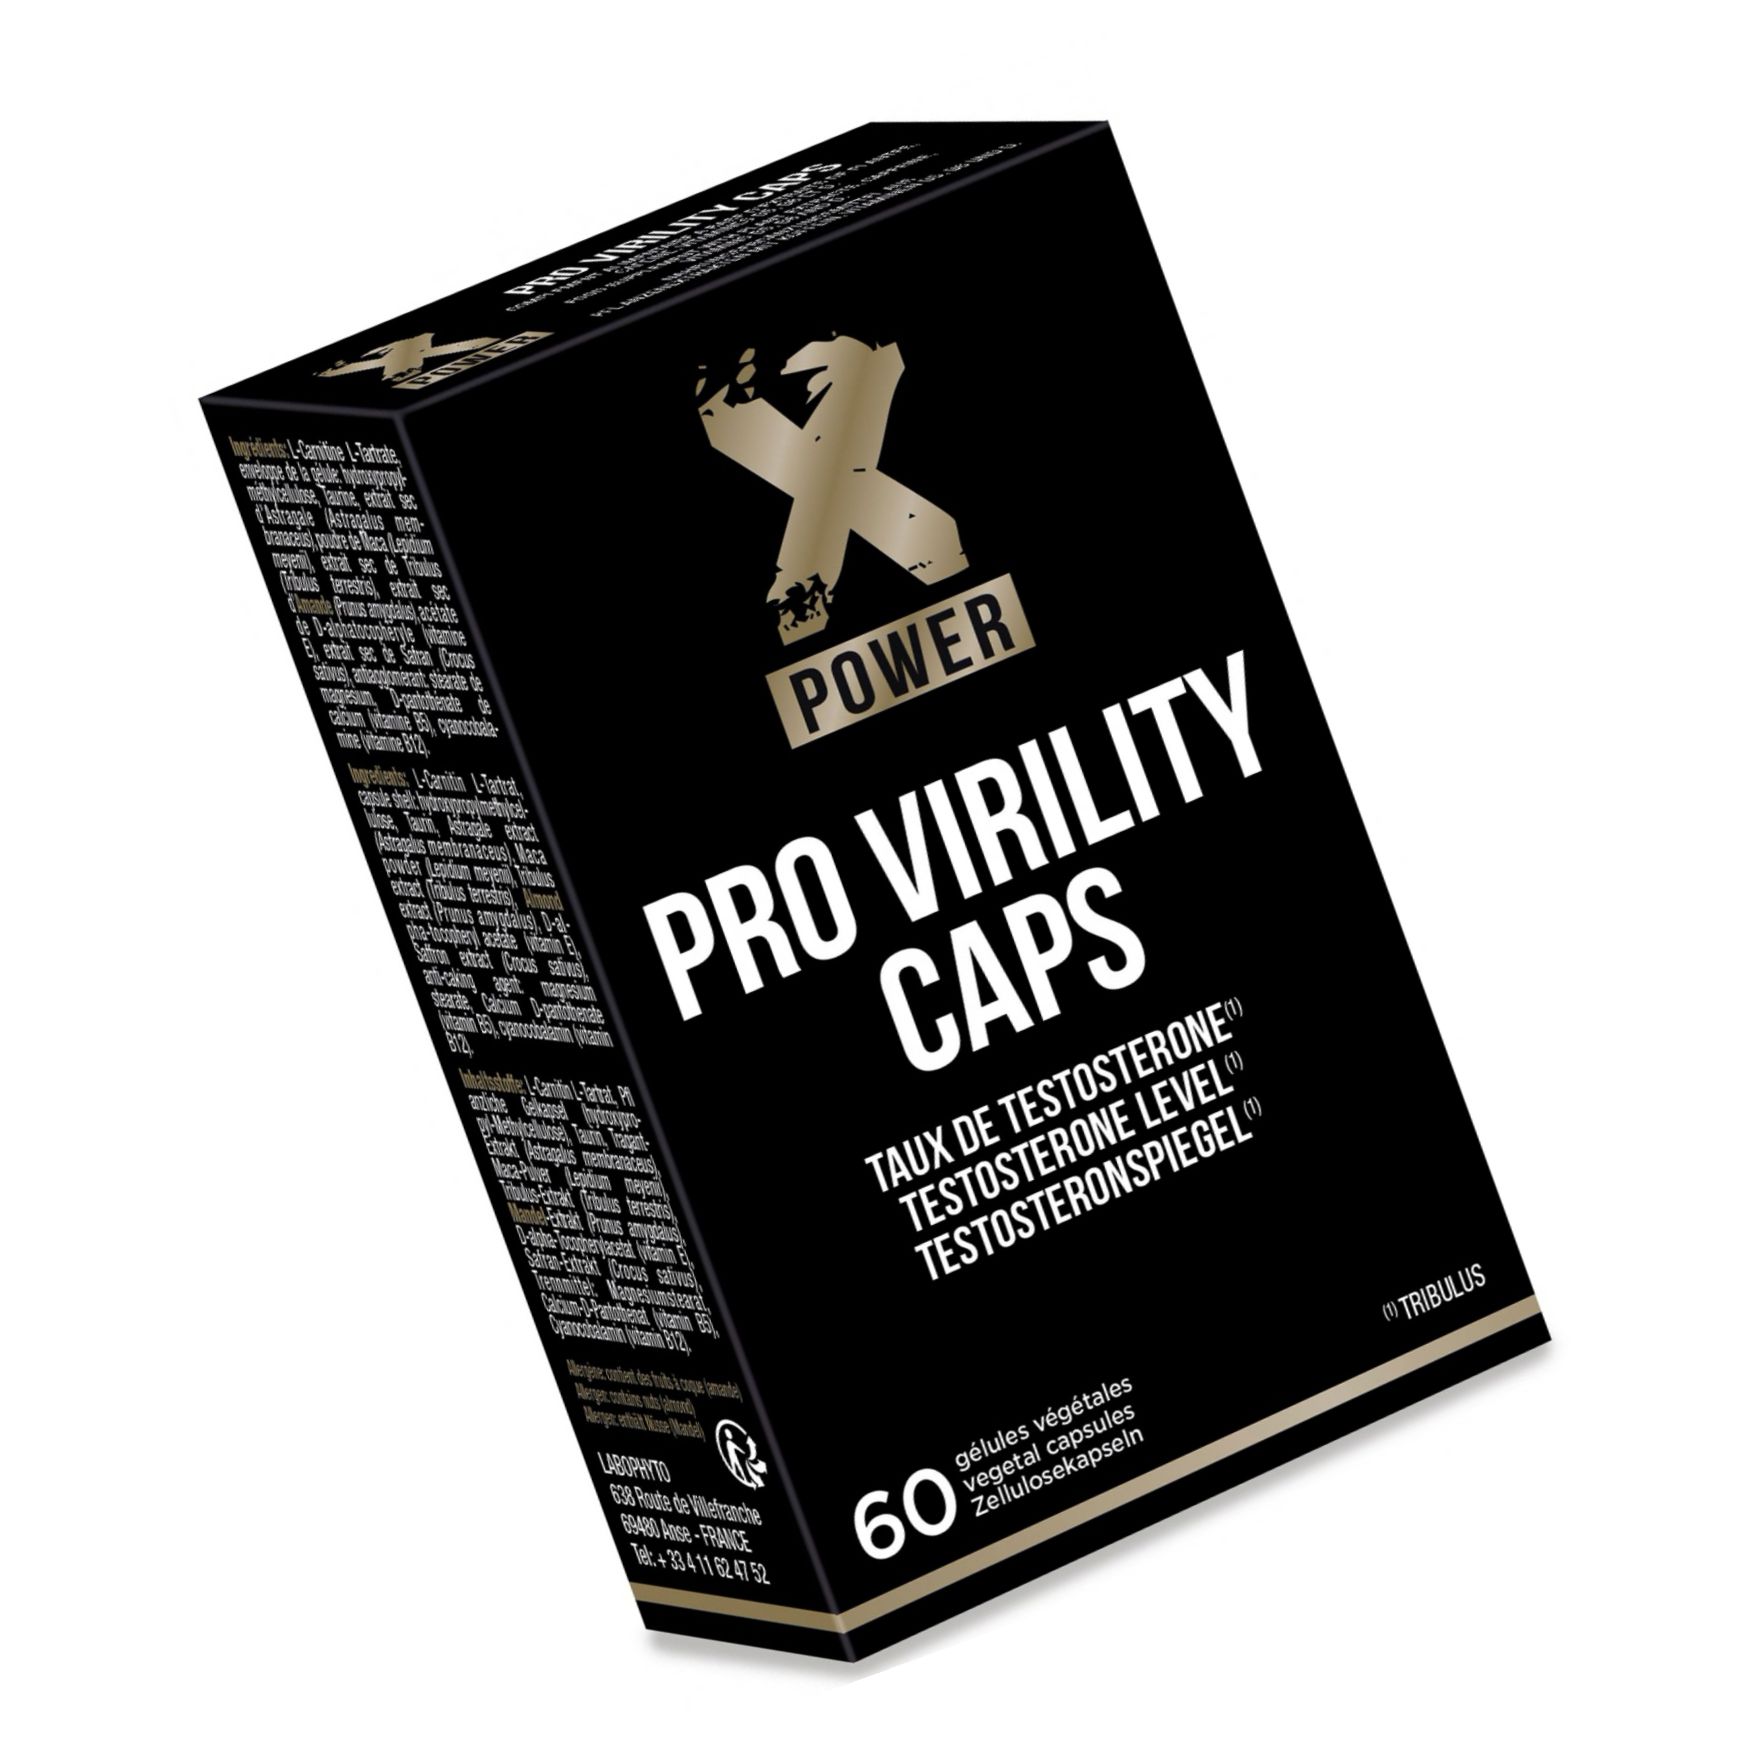 Pro Virility Caps